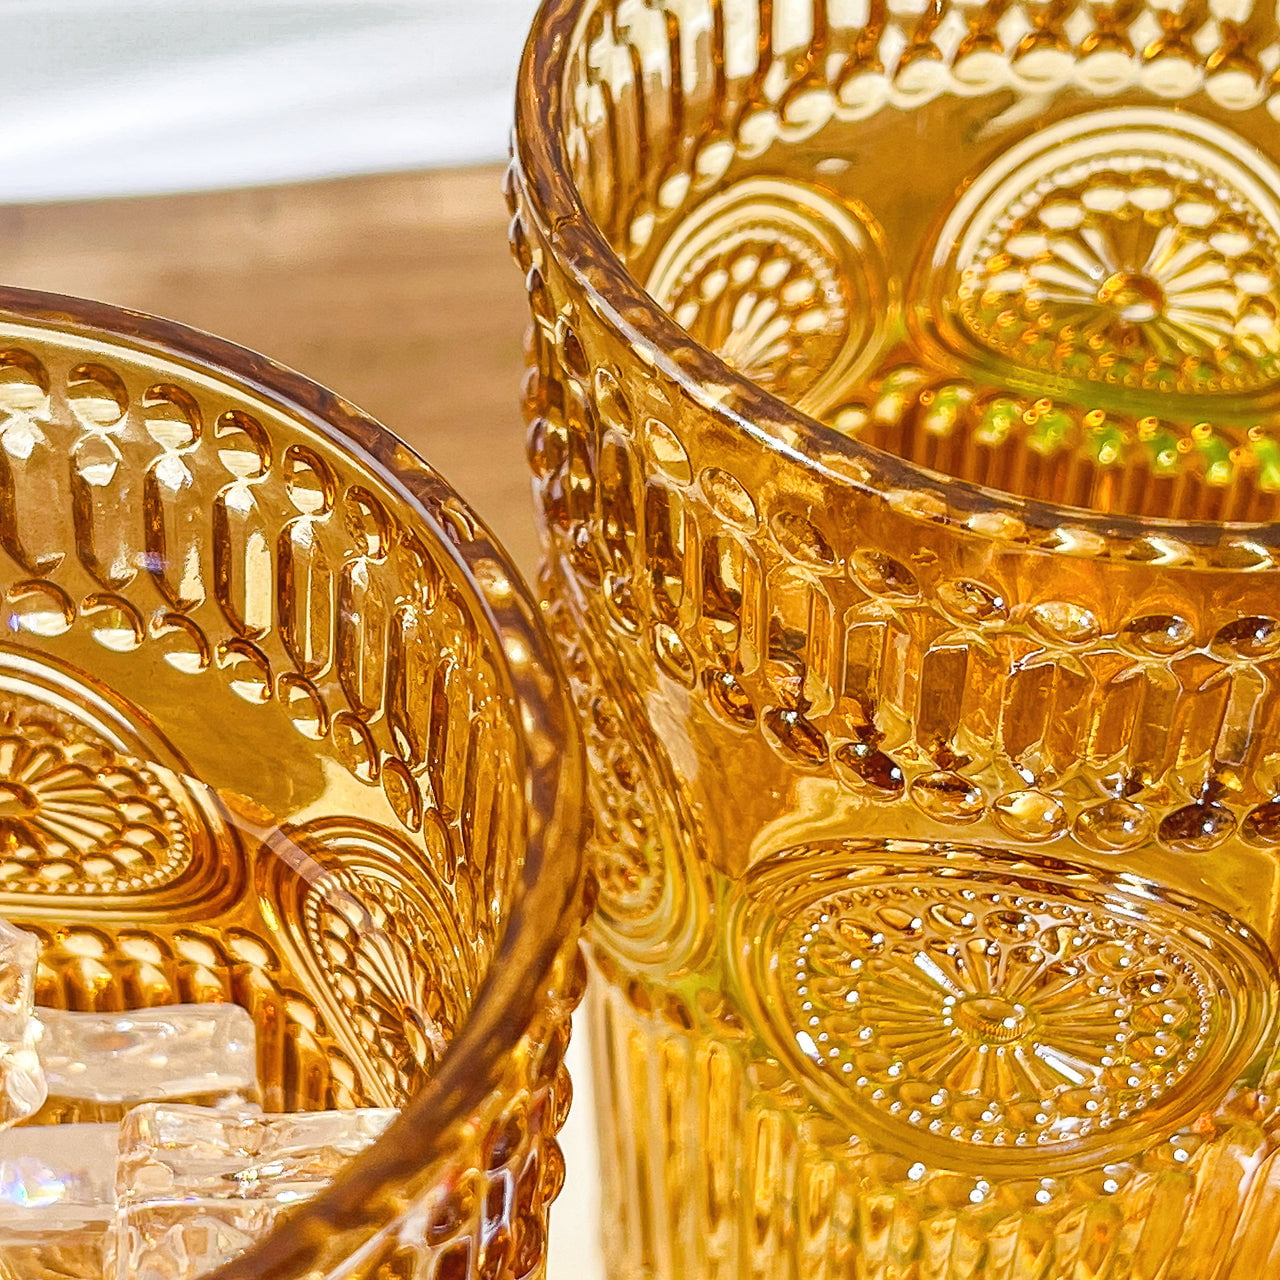 La Vie Parisienne Drinking Glasses, Set of 4 – Paperproducts Design